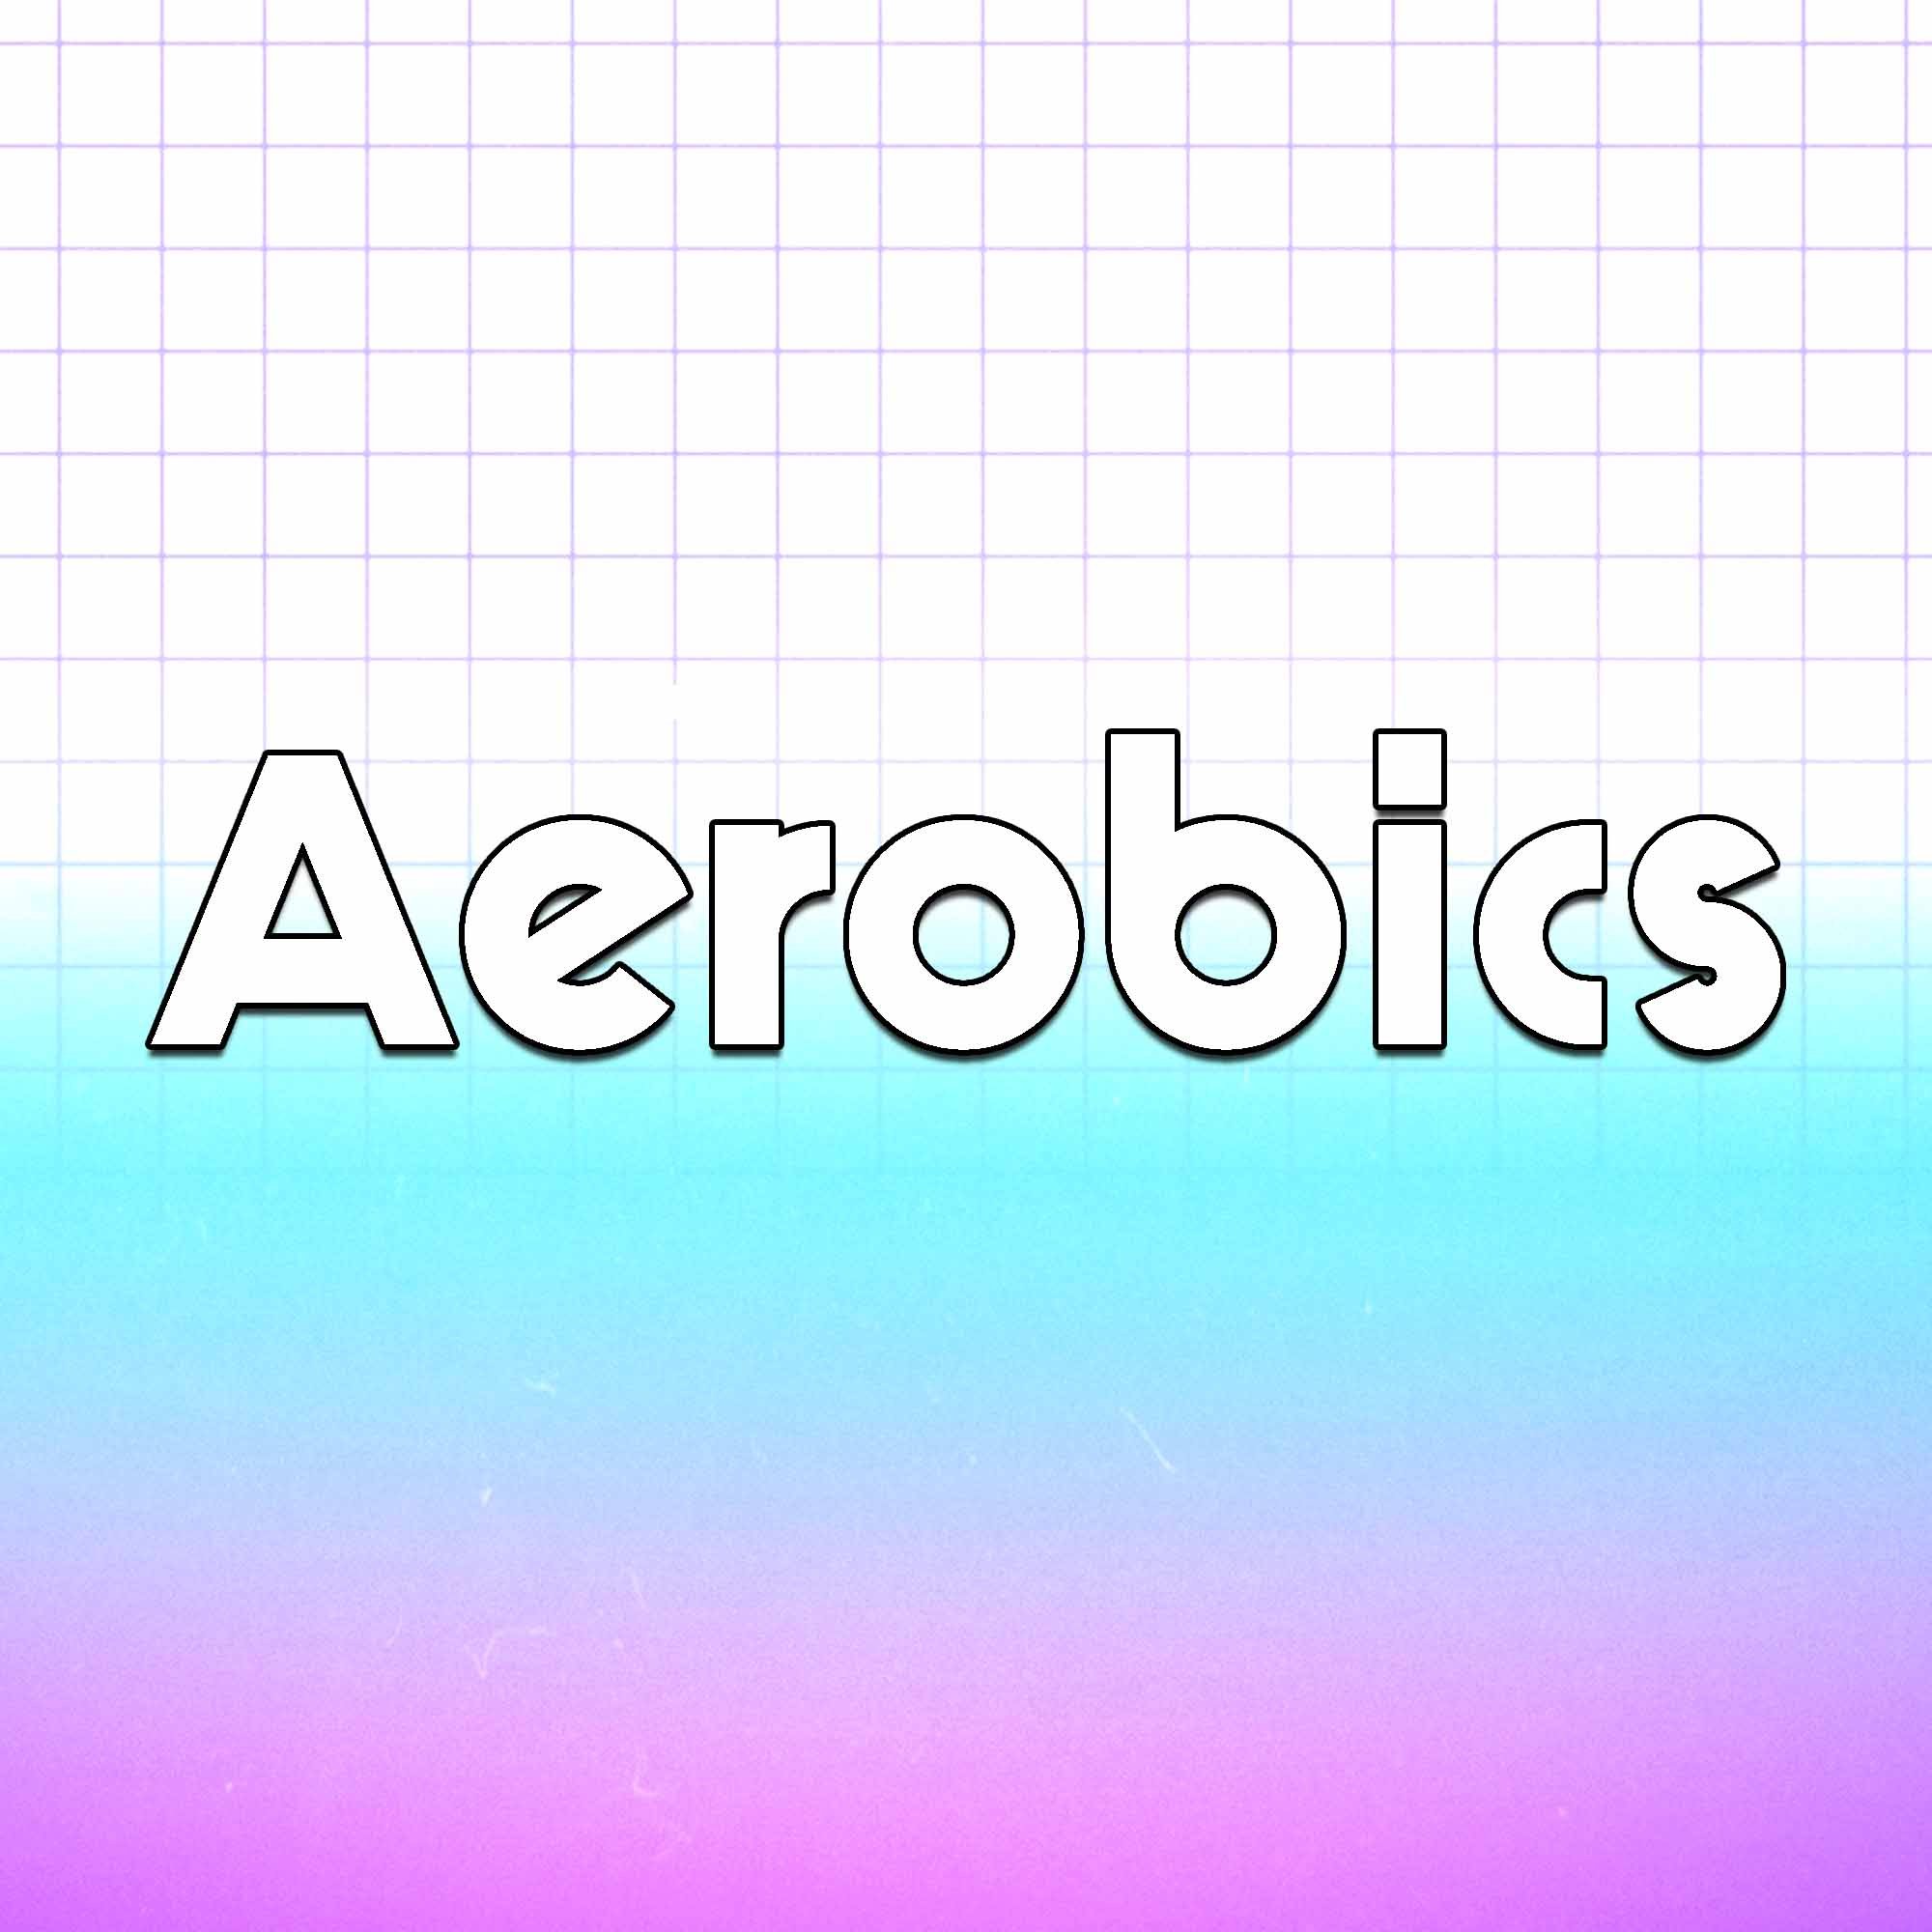 Blog categories - aerobics-min.jpg